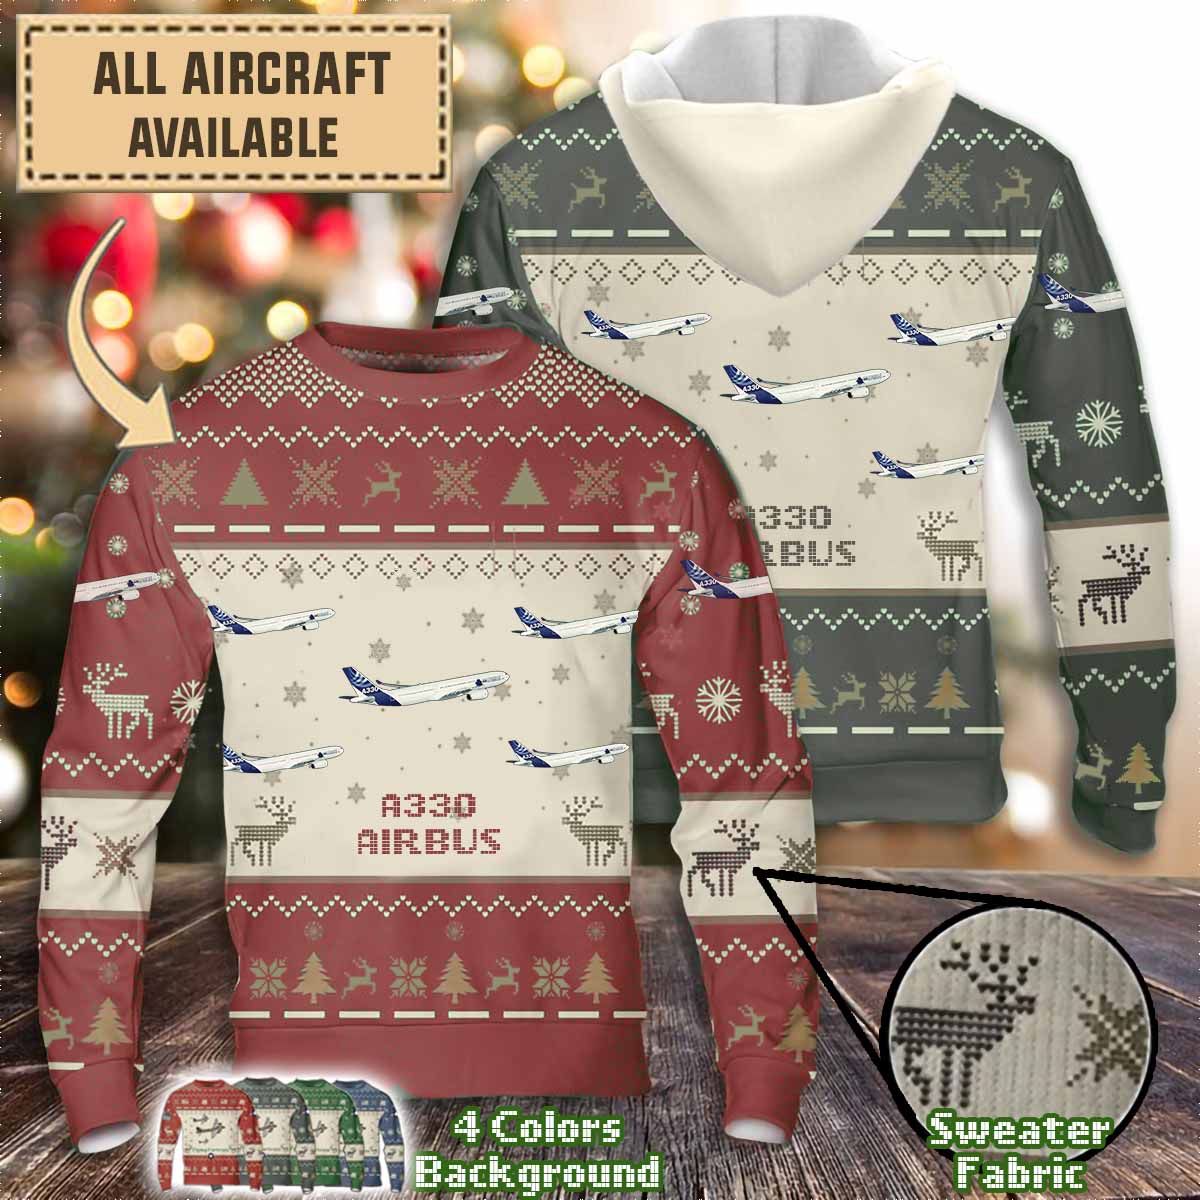 airbus a330aircraft sweater wae6h